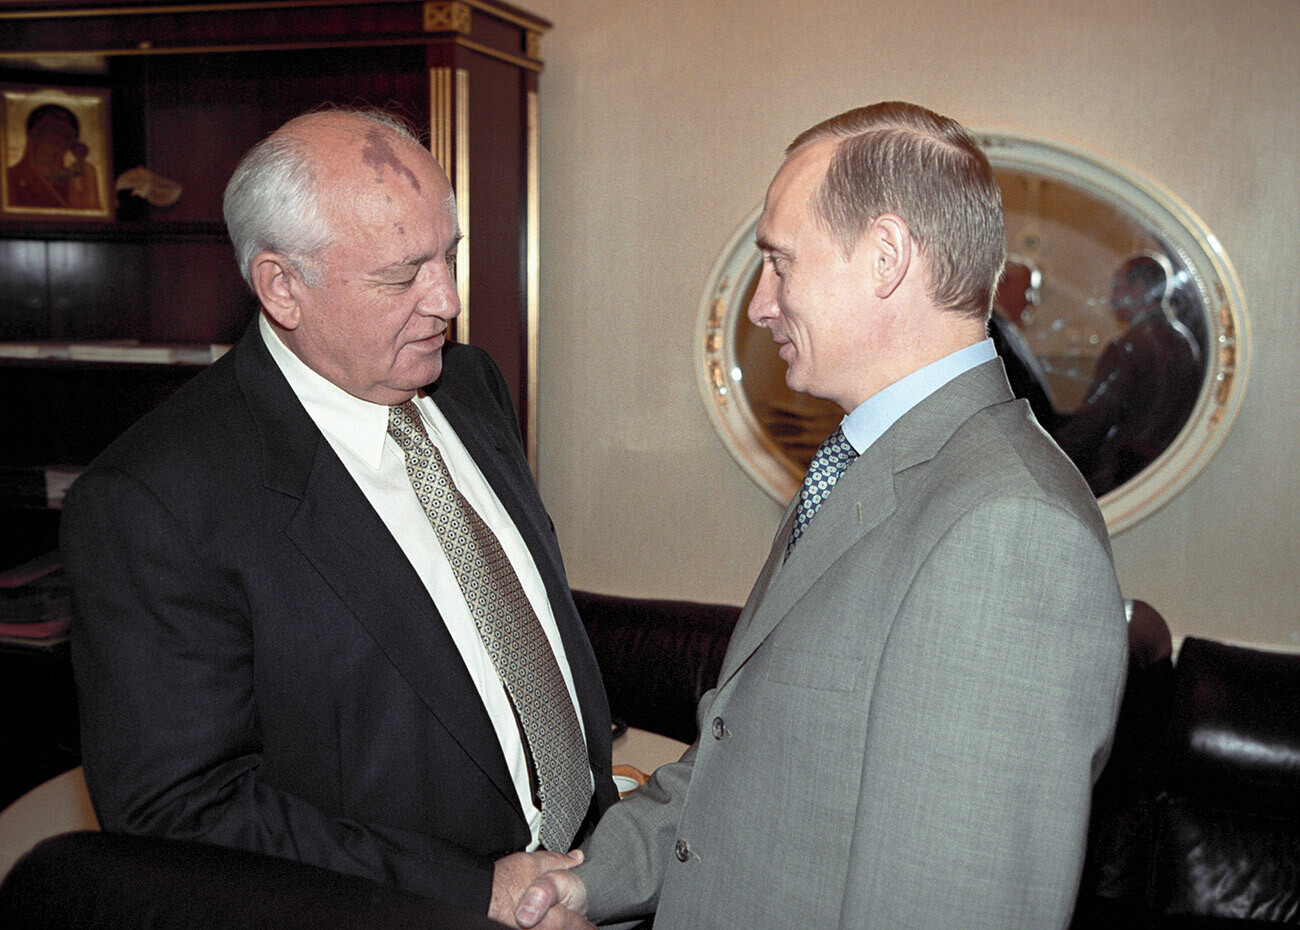 Горбачов и Путин, 2000 година

